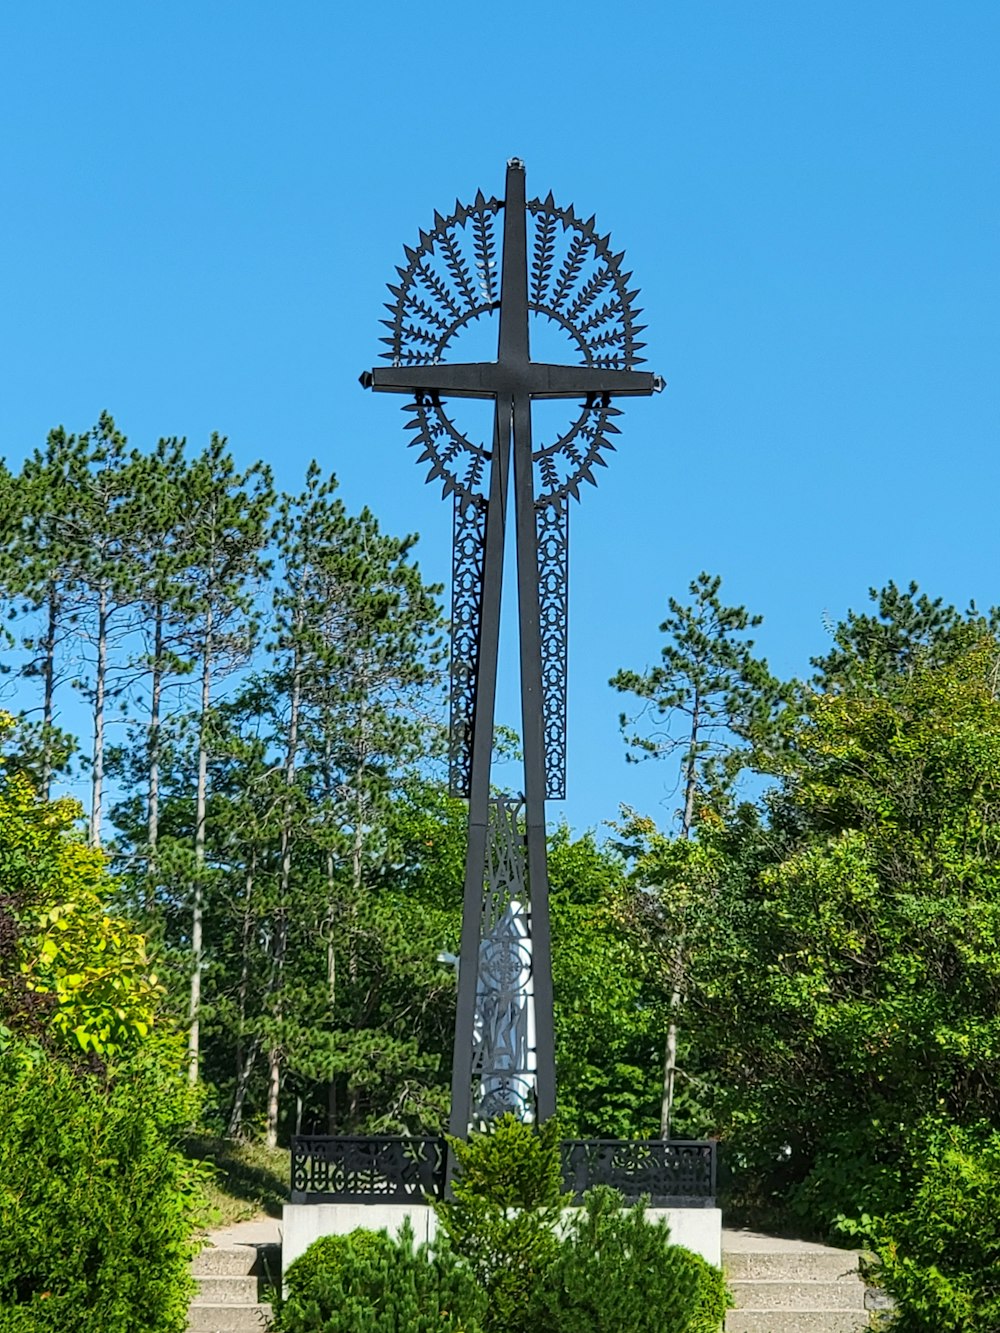 a cross on a pole